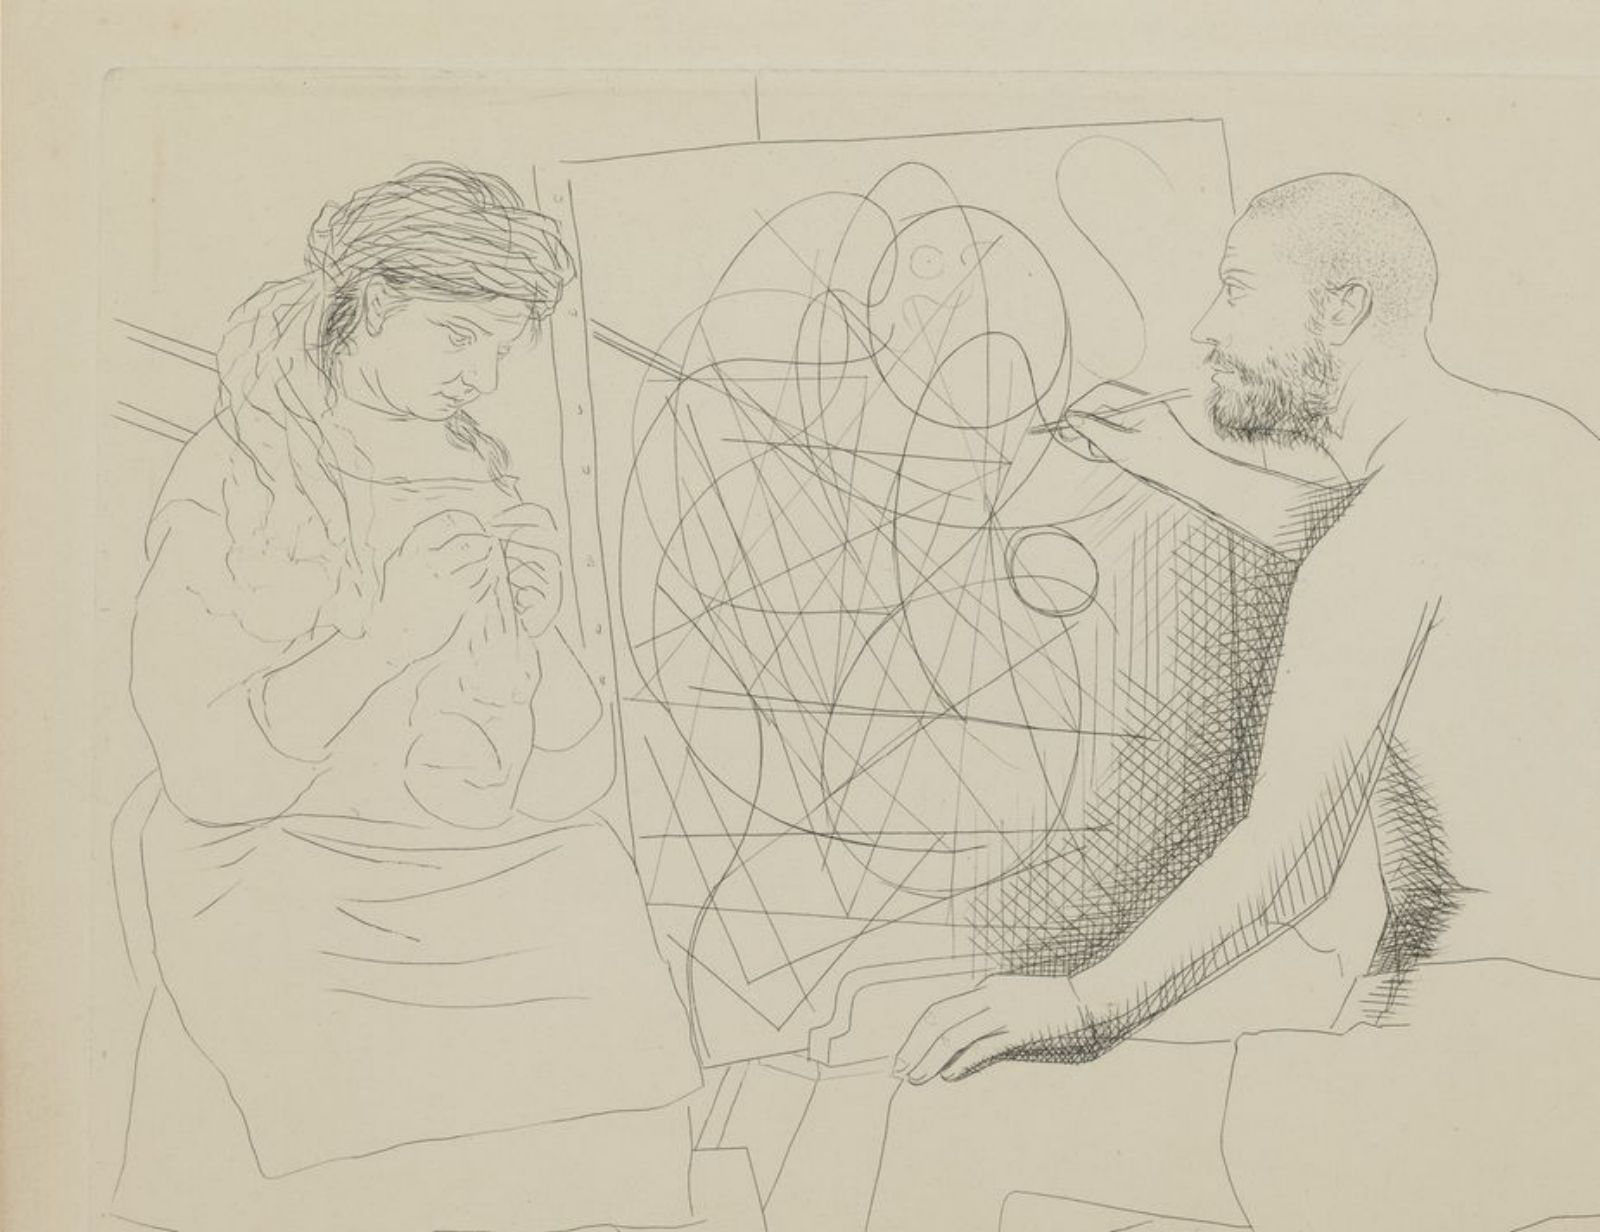 Aguafuerte. “Pintor y modelo tejiendo”, en “Le chef-d’oeuvre inconnu”, de Pablo Picasso.